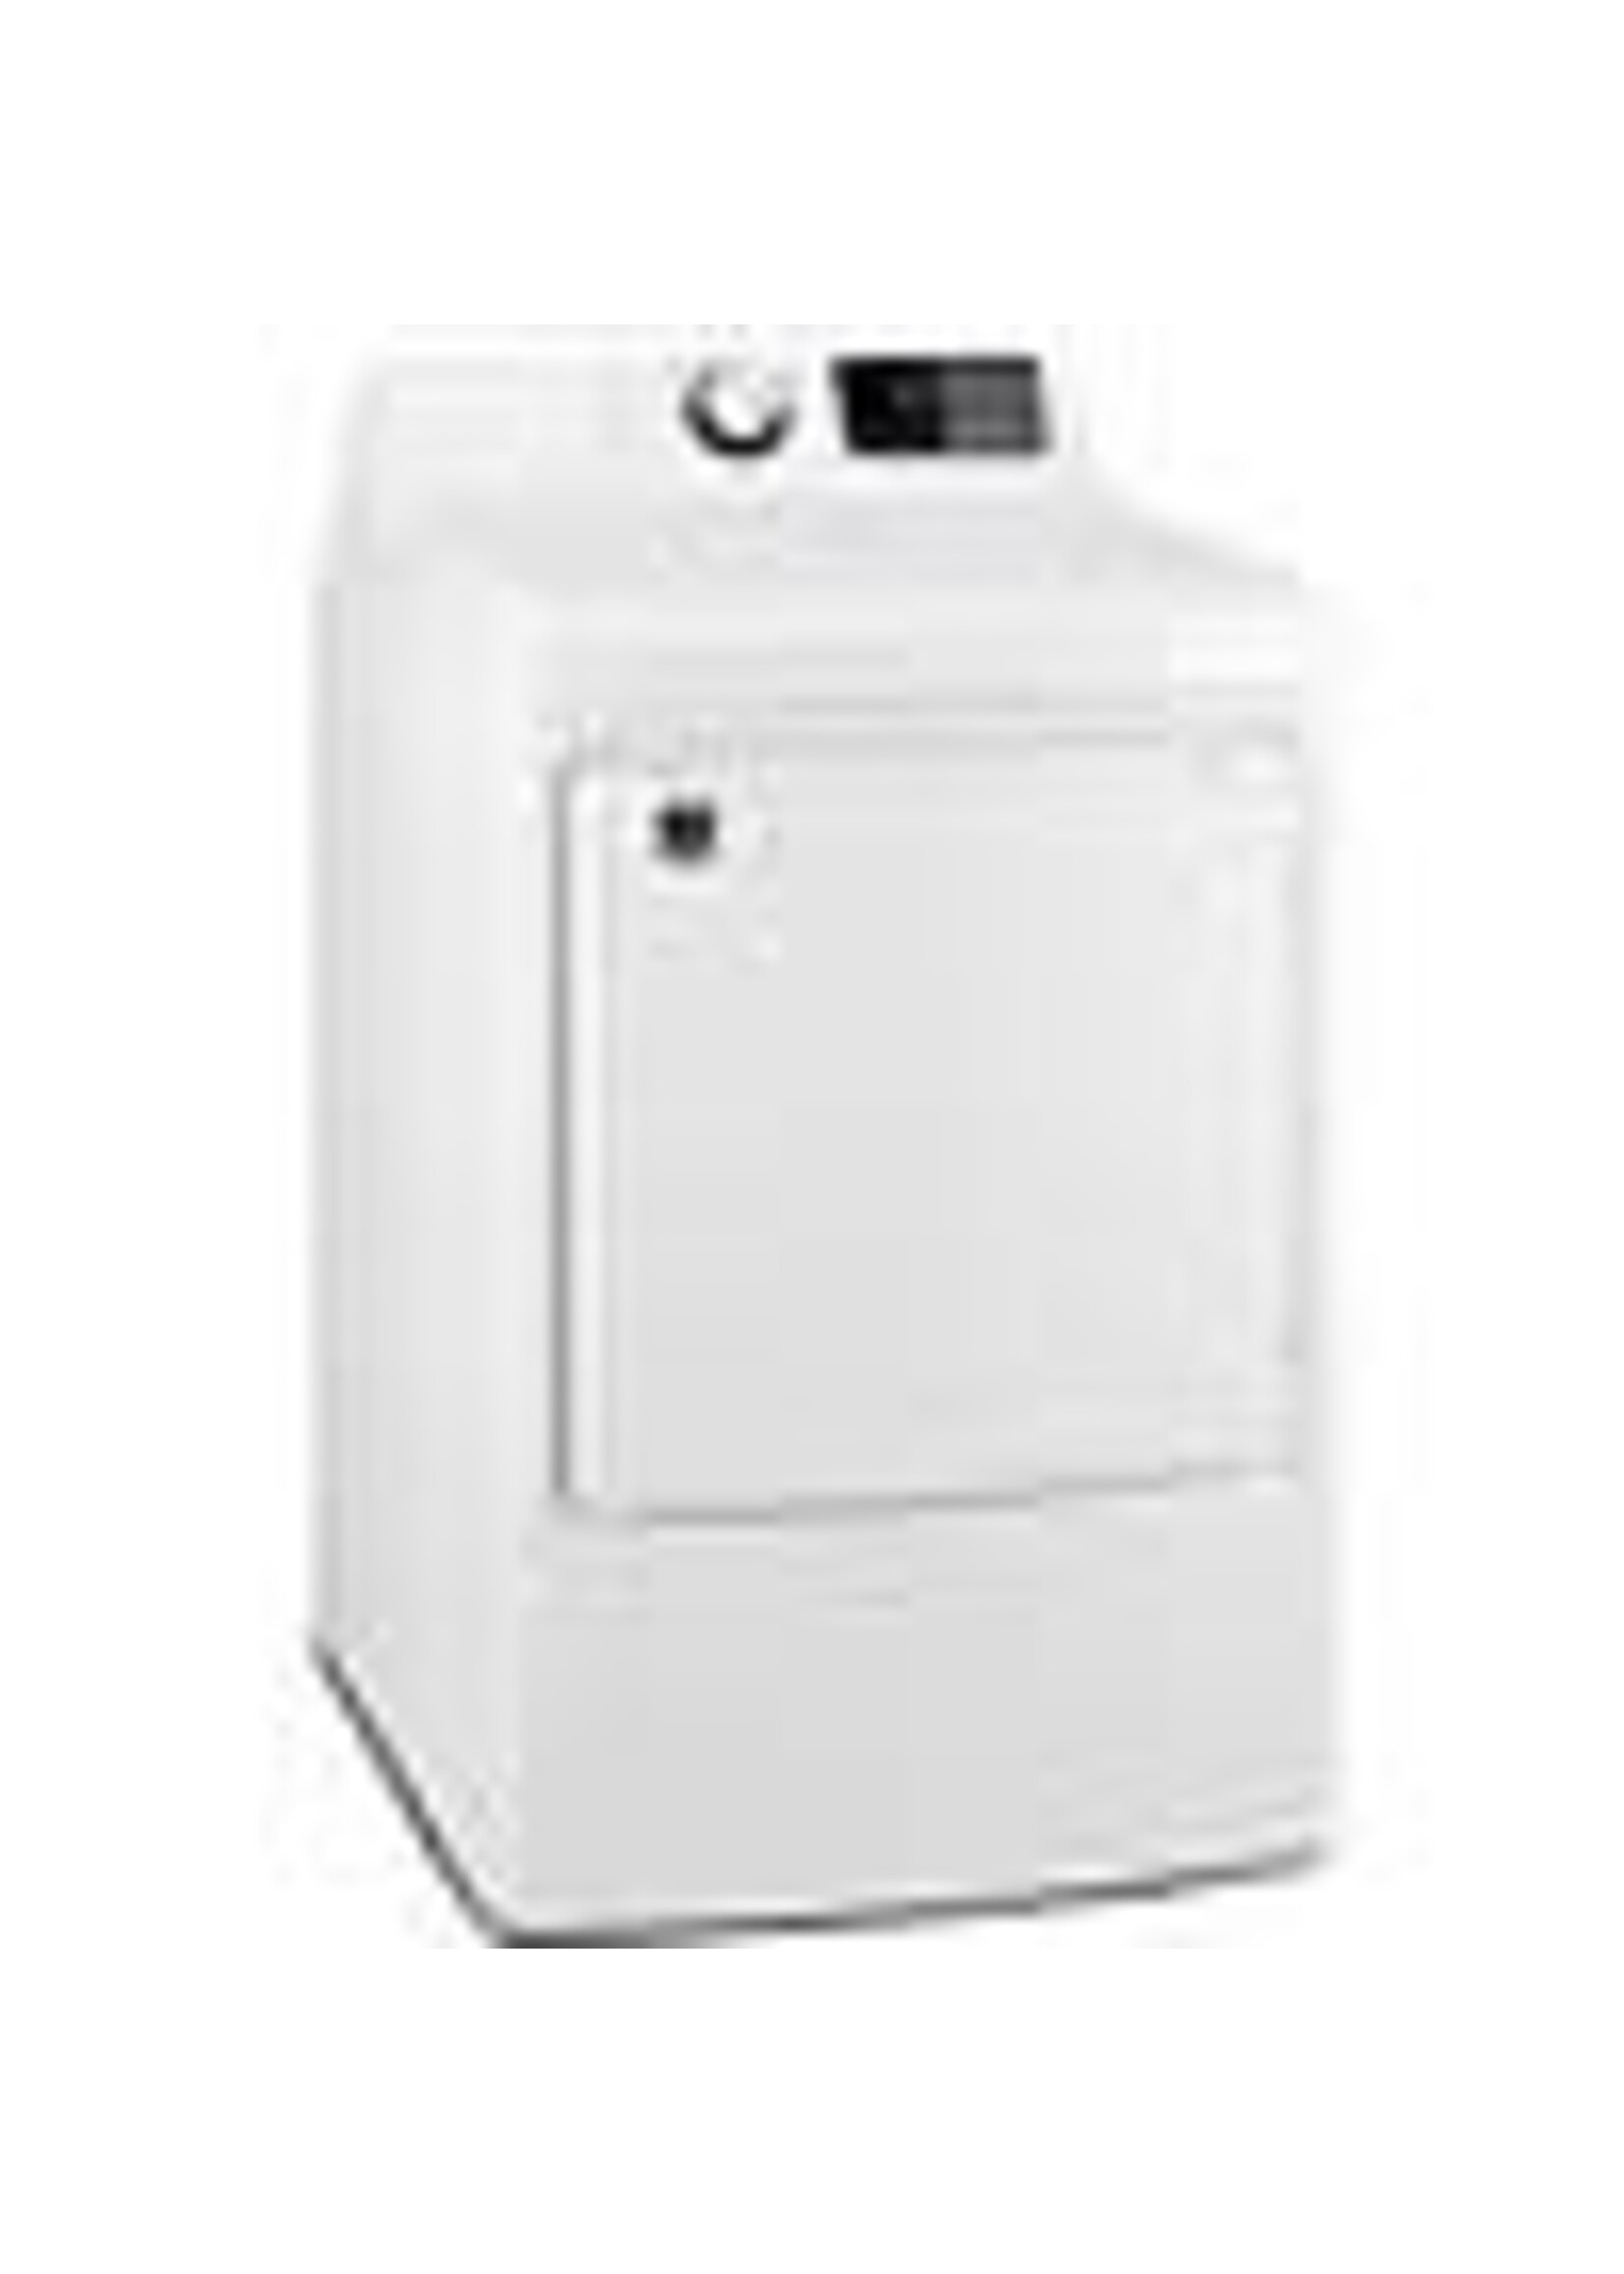 7.5 CF Electric Dryer - White